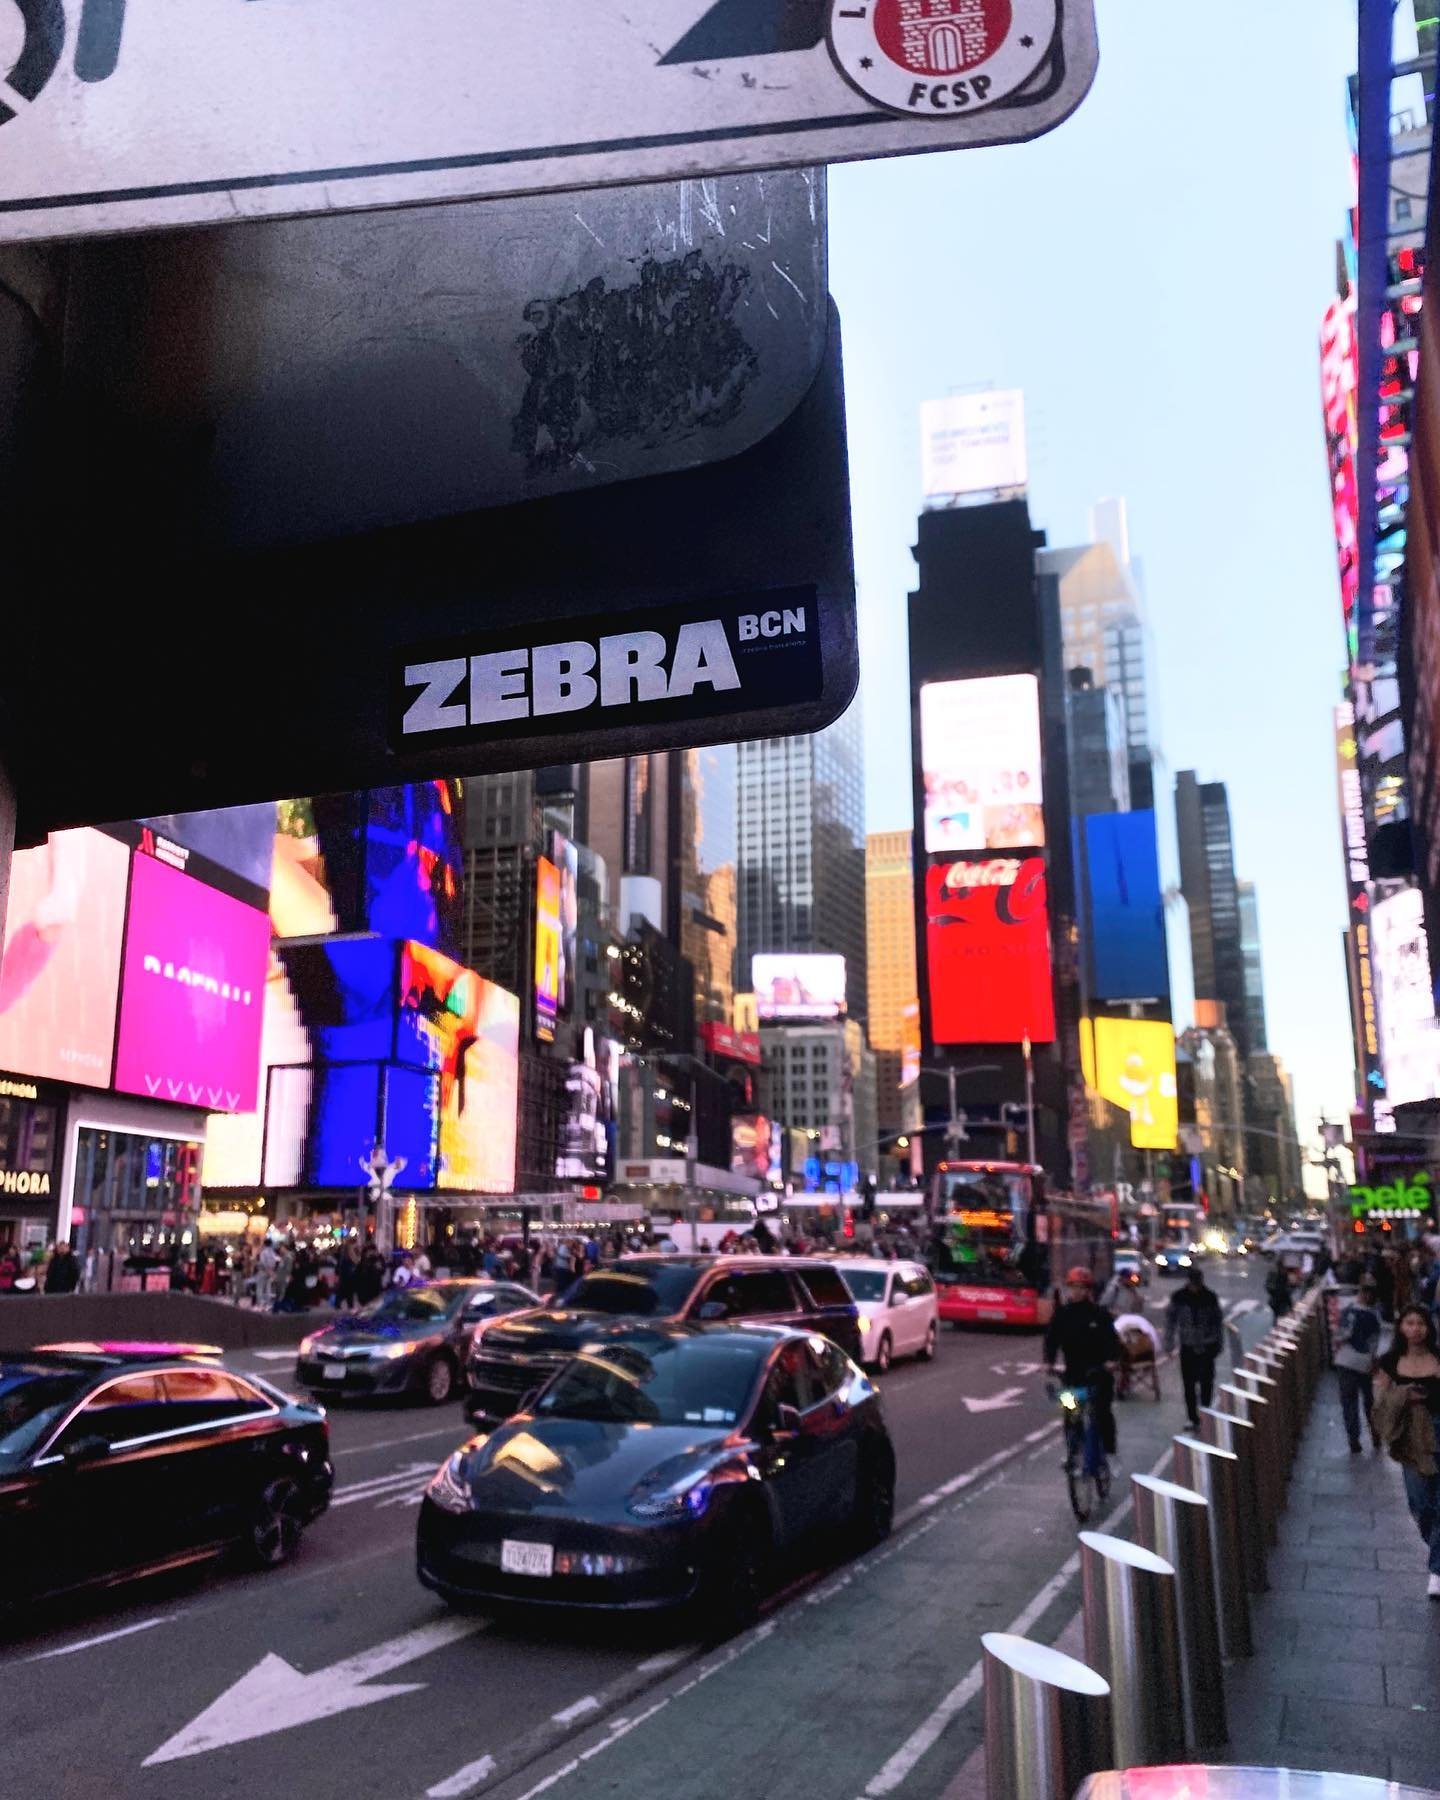 Breaking News ⚠ ZEBRA invaded Times Square
.
.
#brand #alchemy #studio
#traveler #design #business #strategy